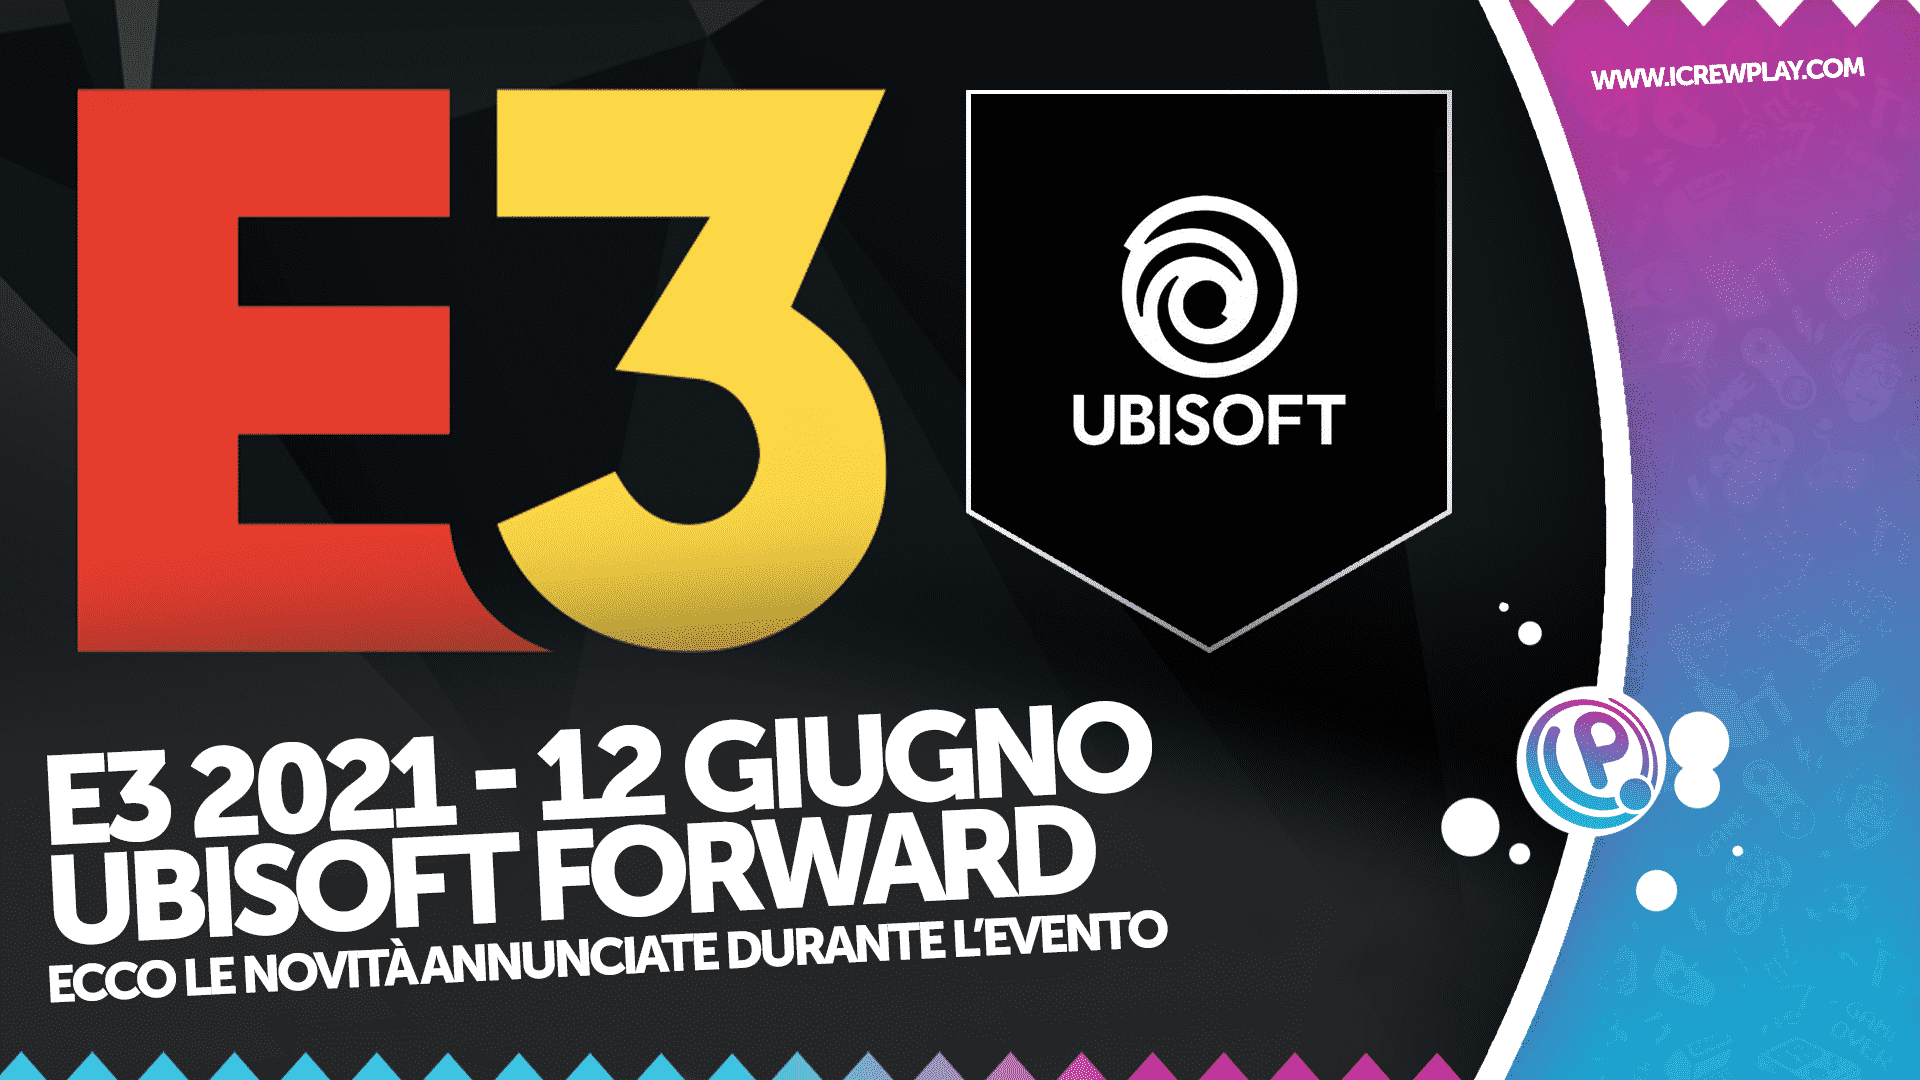 E3 2021, Ubisoft Forward, E3 2021 Ubisoft Forward, Ubisoft Forward Annunci, Trailer Ubisoft Forward